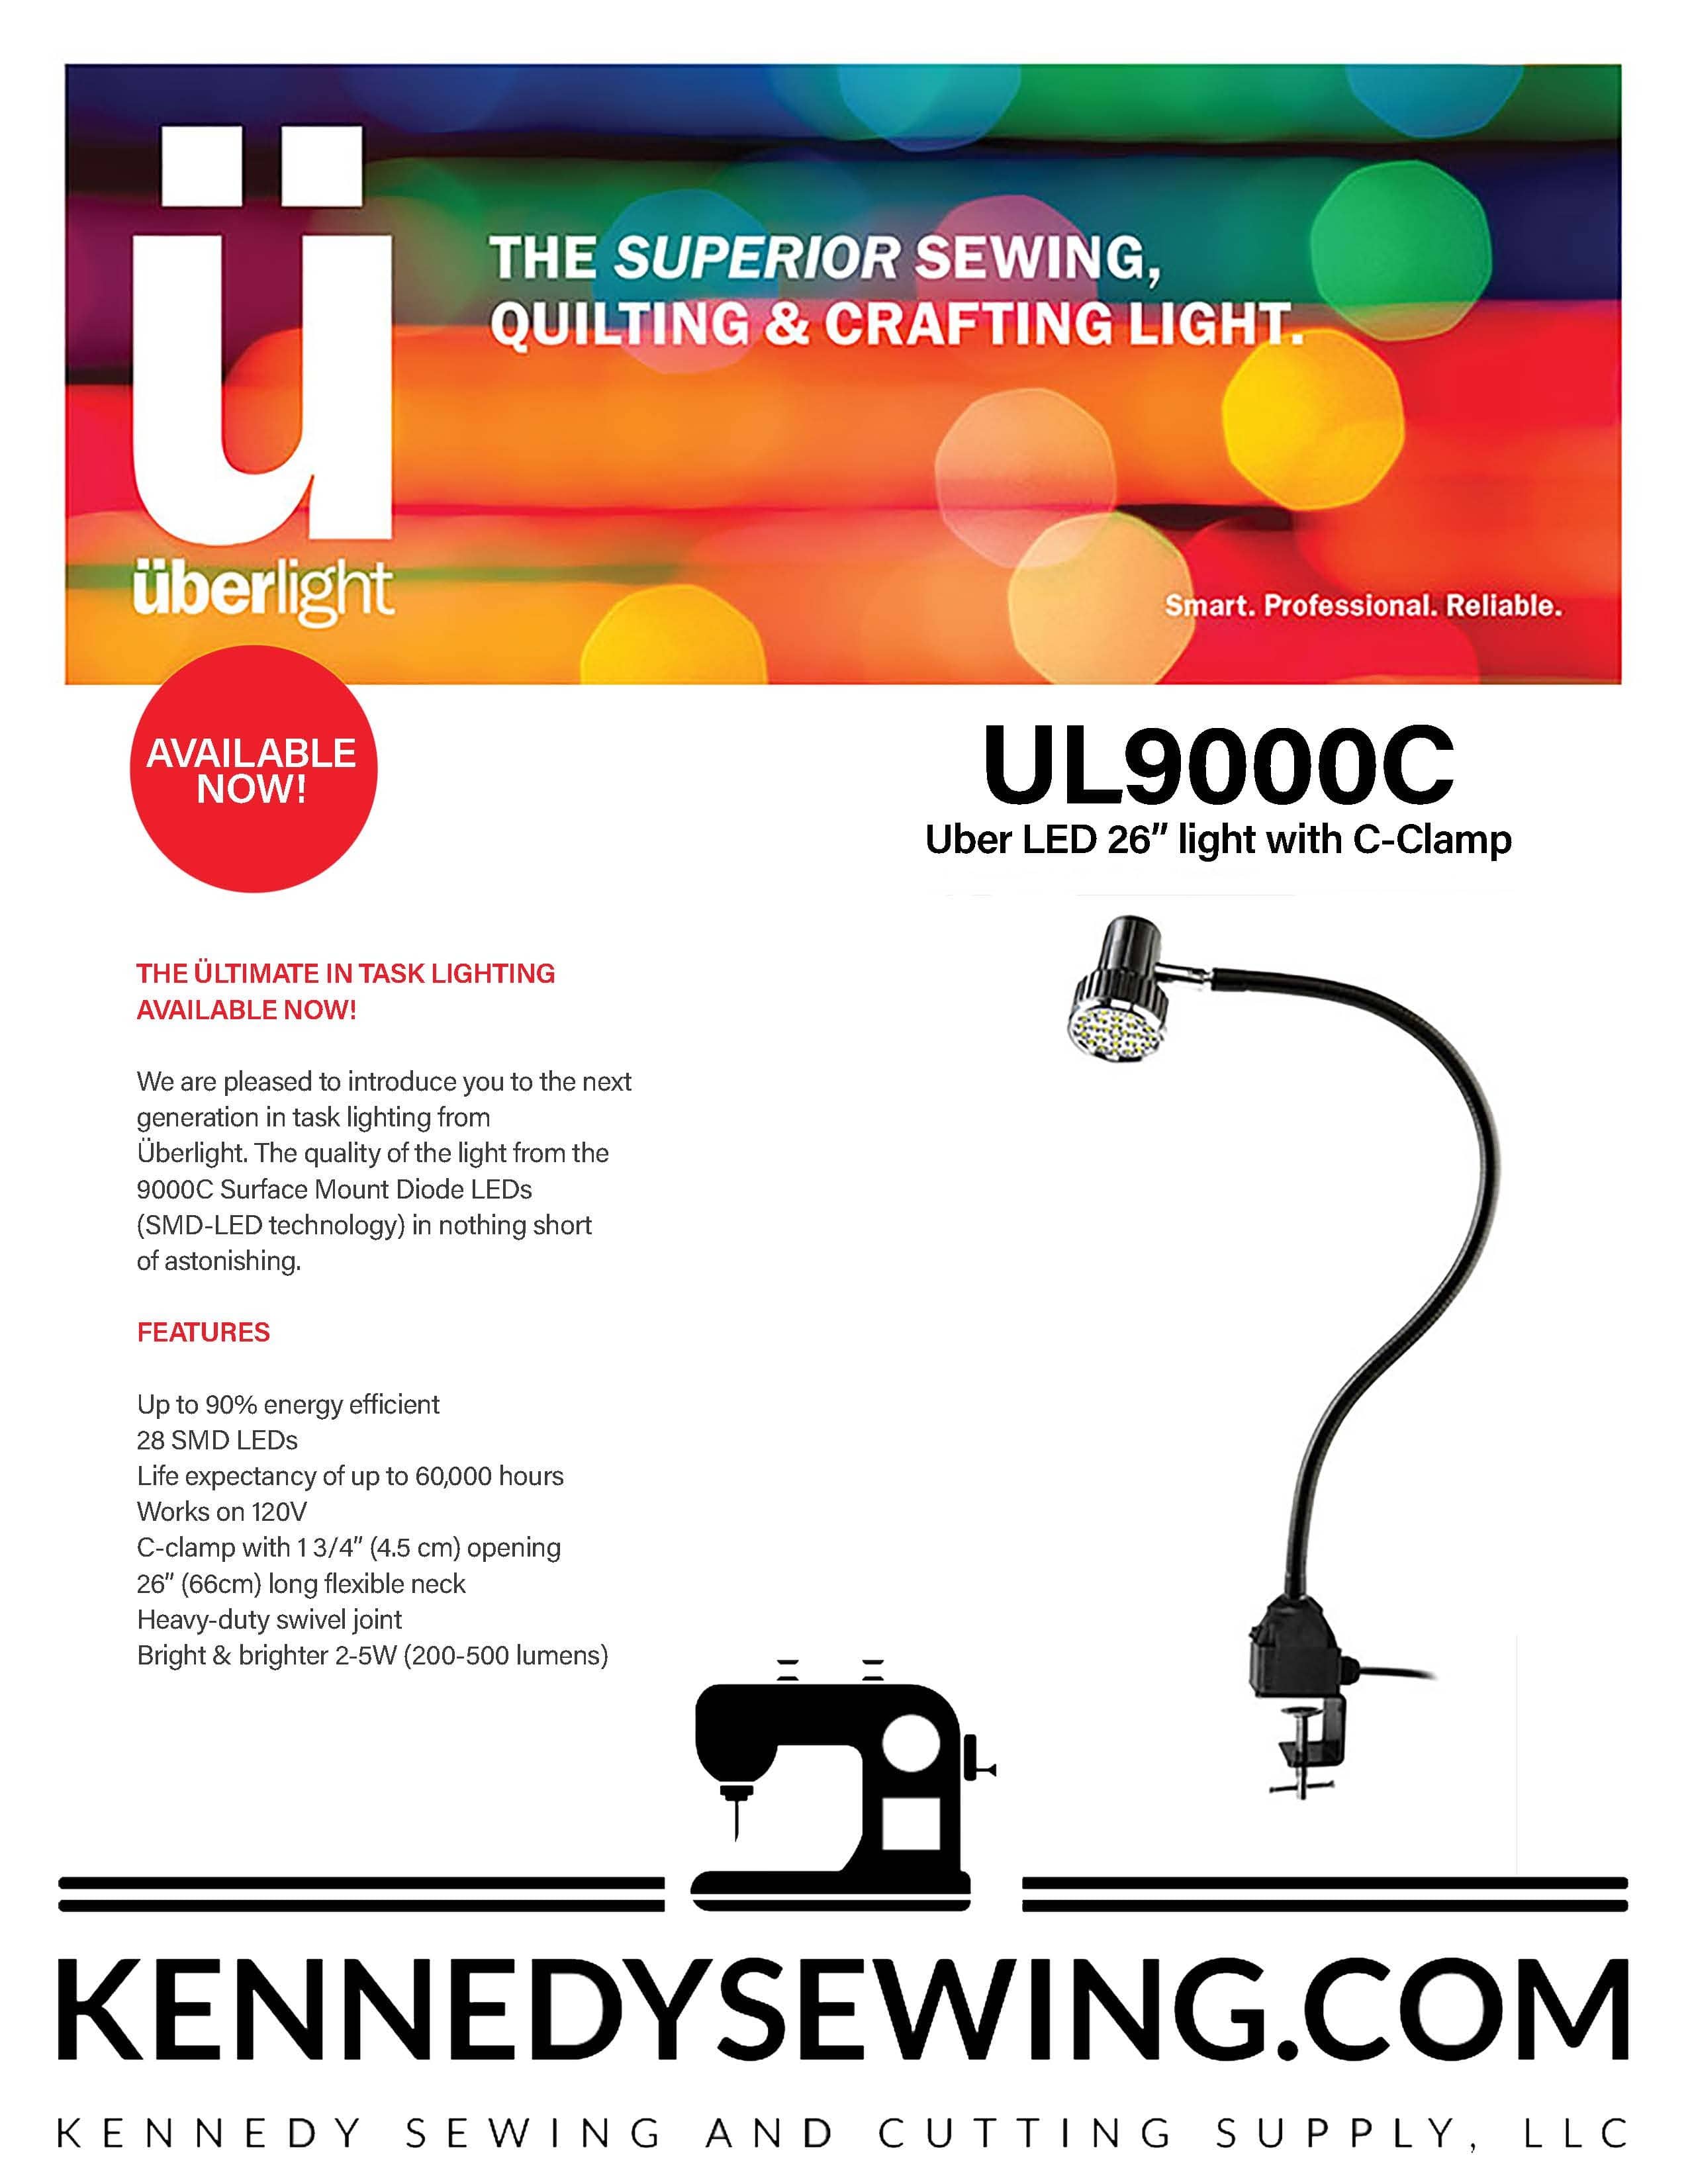 UBERLIGHT UL9000C
LED LIGHT
110 VOLTS
28 SMD LEDs
26" LONG FLEXIBLE NECK
